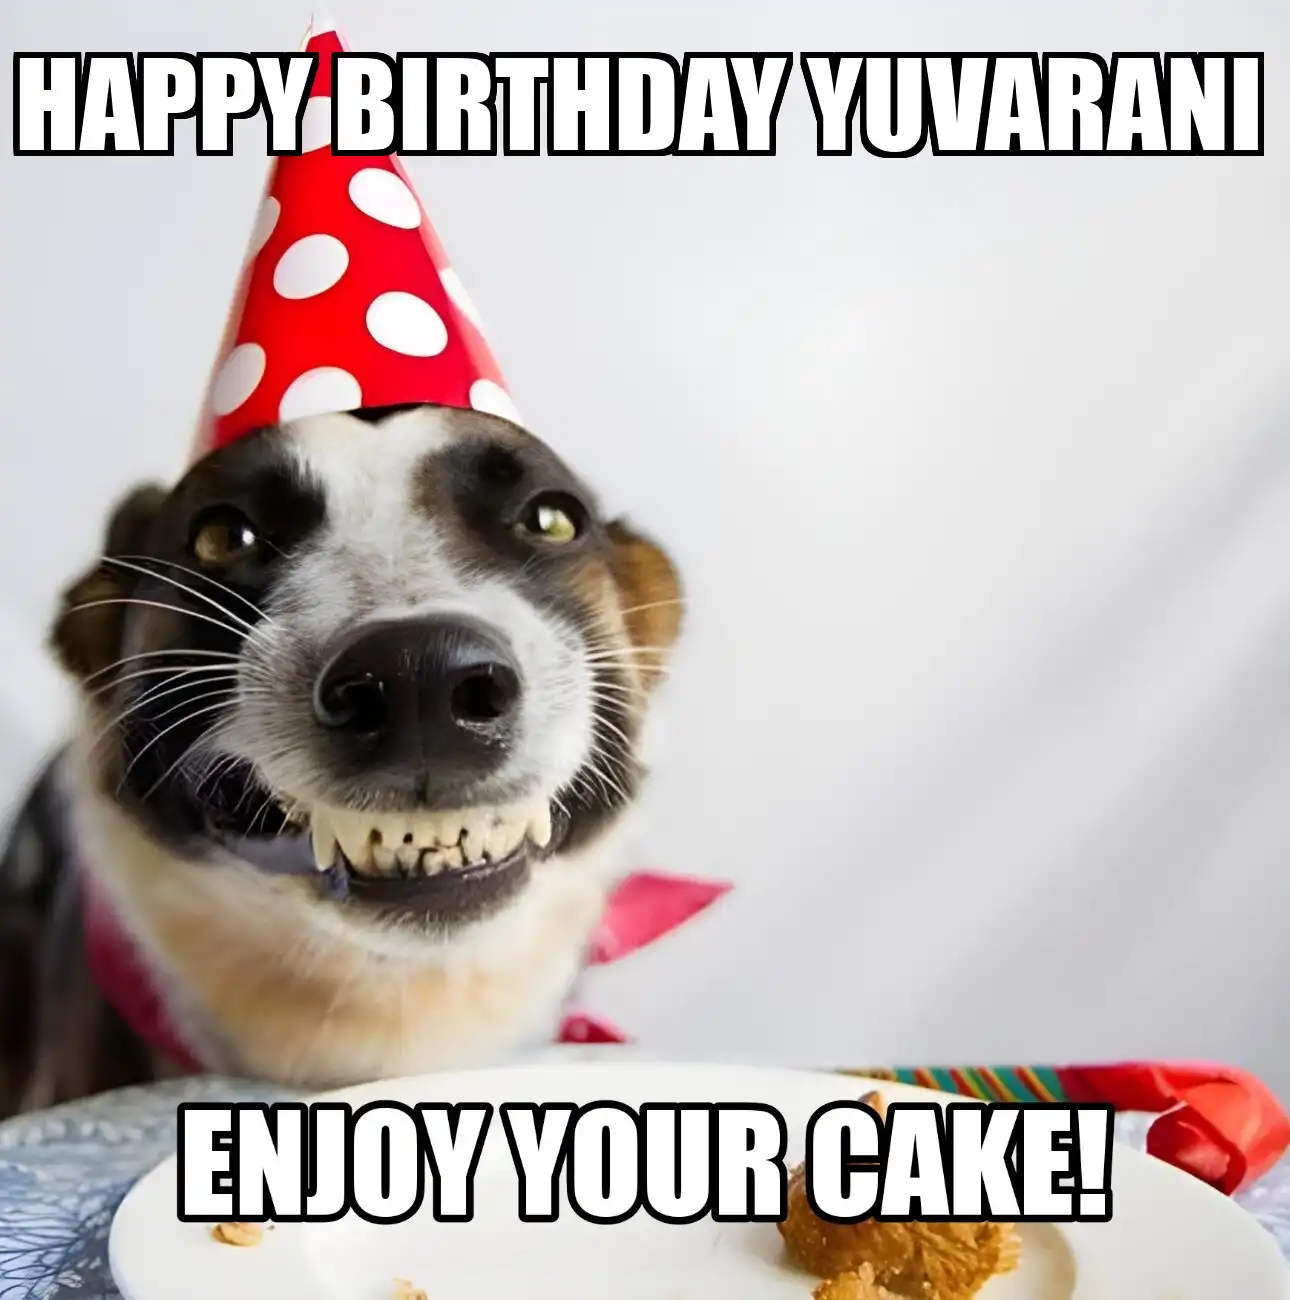 Happy Birthday Yuvarani Enjoy Your Cake Dog Meme